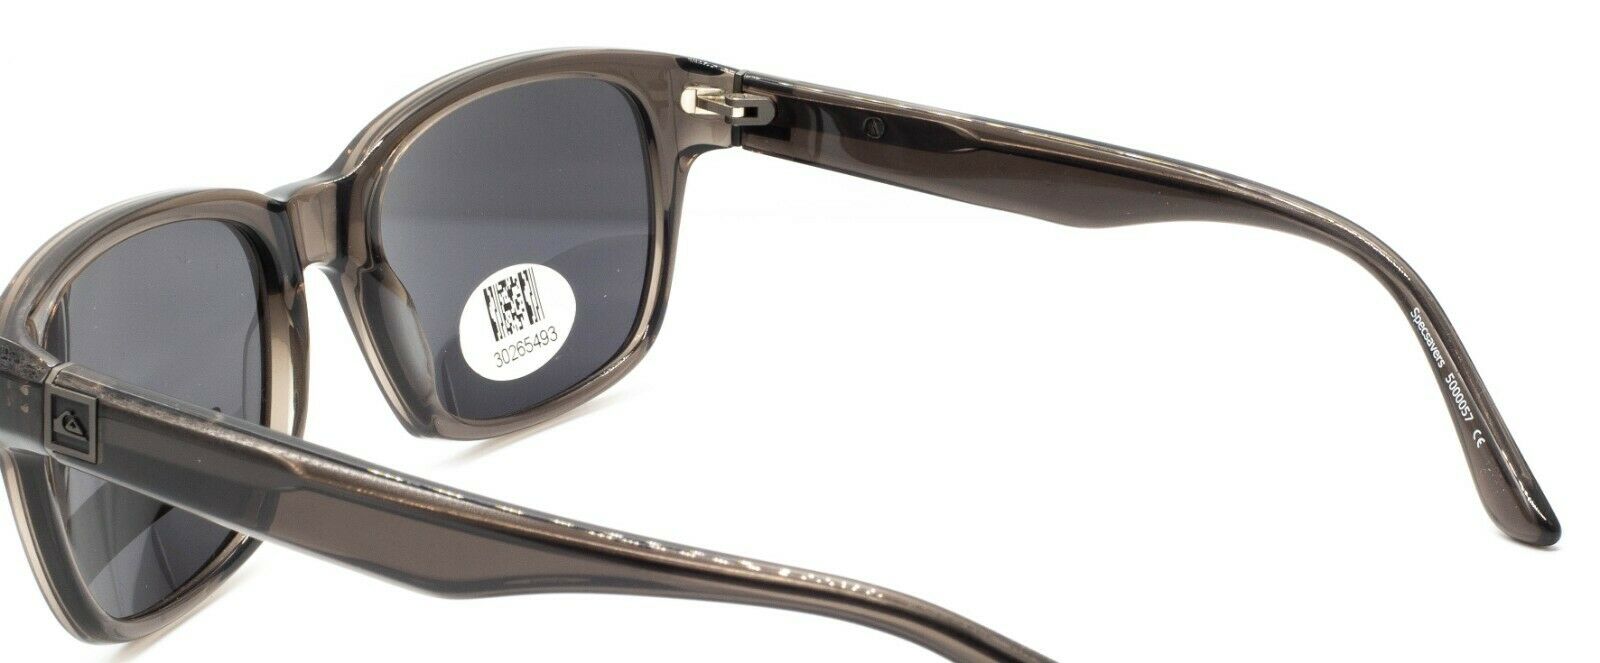 Sun 30265493 Glasses QUIKSILVER Eyewear - New 101 GGV Rx QS Sunglasses 55mm Eyewear Shades -